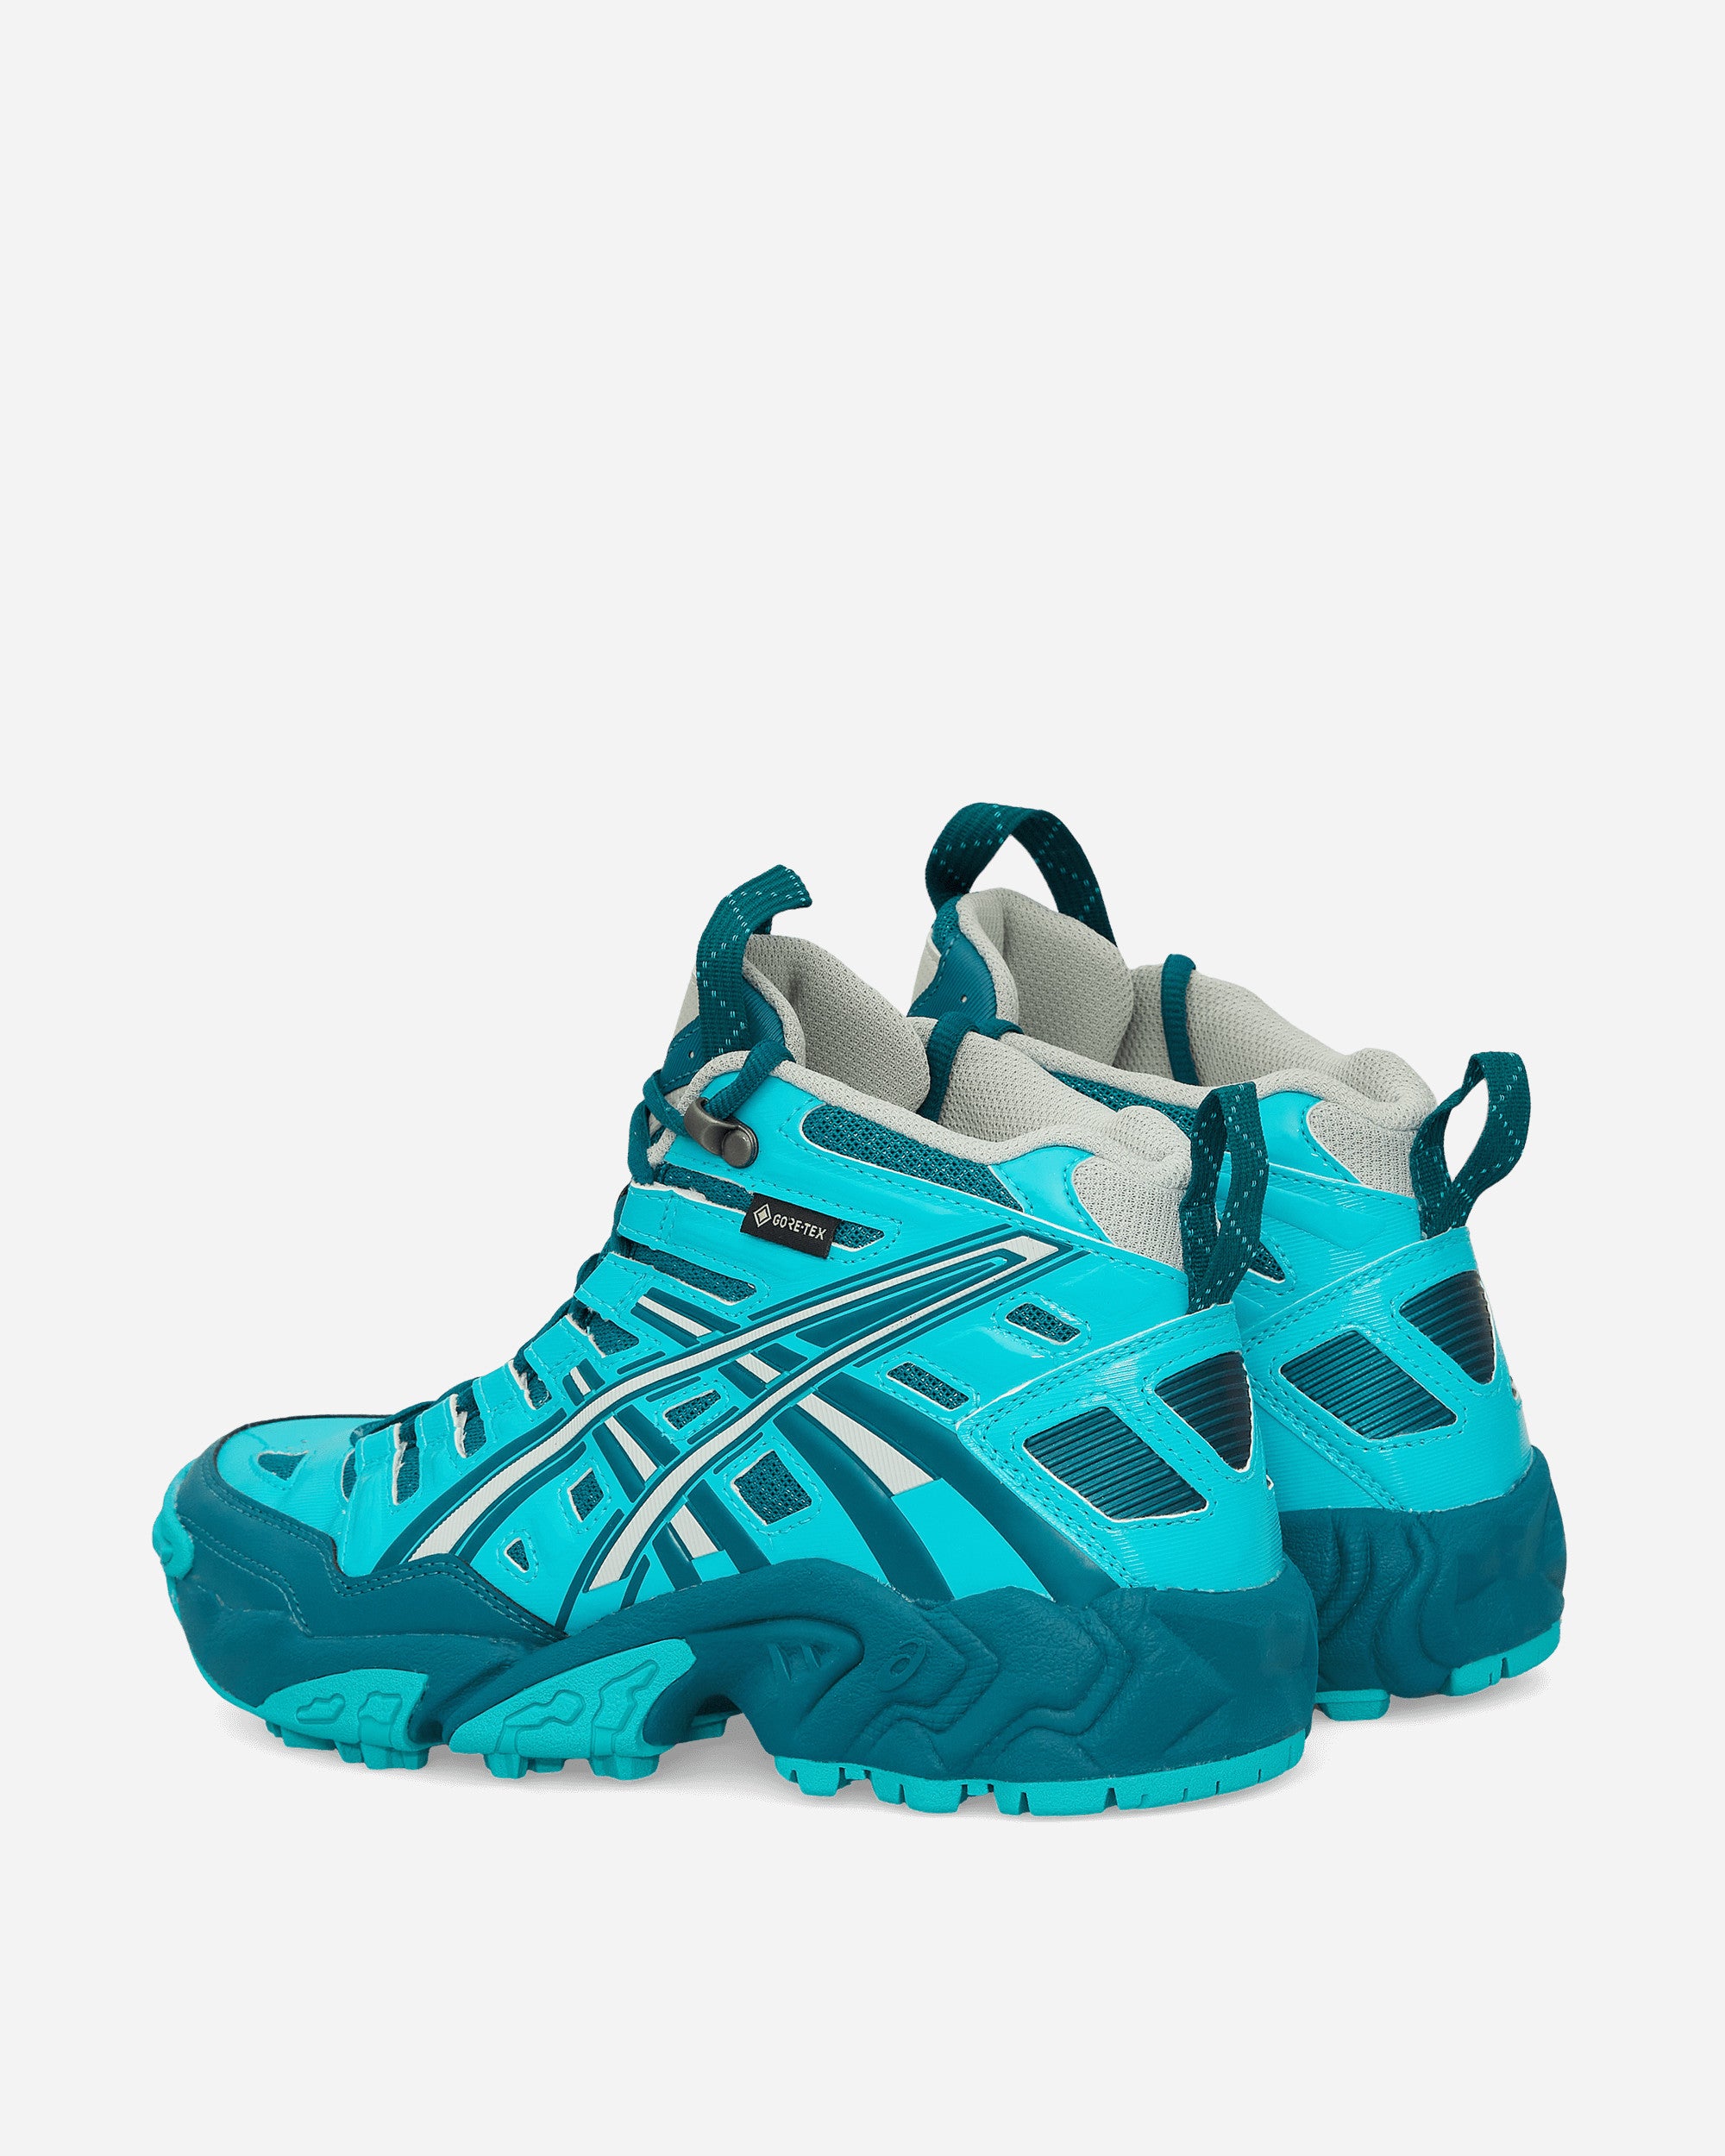 Asics Hs3-S Gel-Nandi Sp V Sea Glass/Lichen Rock Sneakers Low 1201A237-300